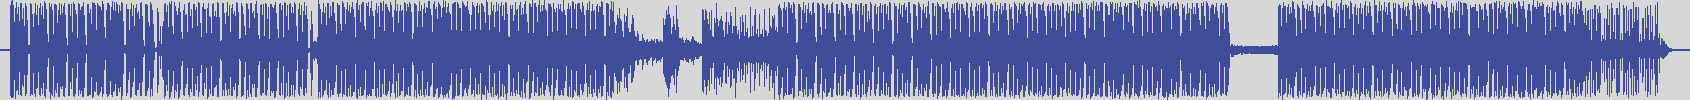 nf_boyz_records [NFY005] Luan Pereira - Gravitational Waves [House Factory Mix] audio wave form